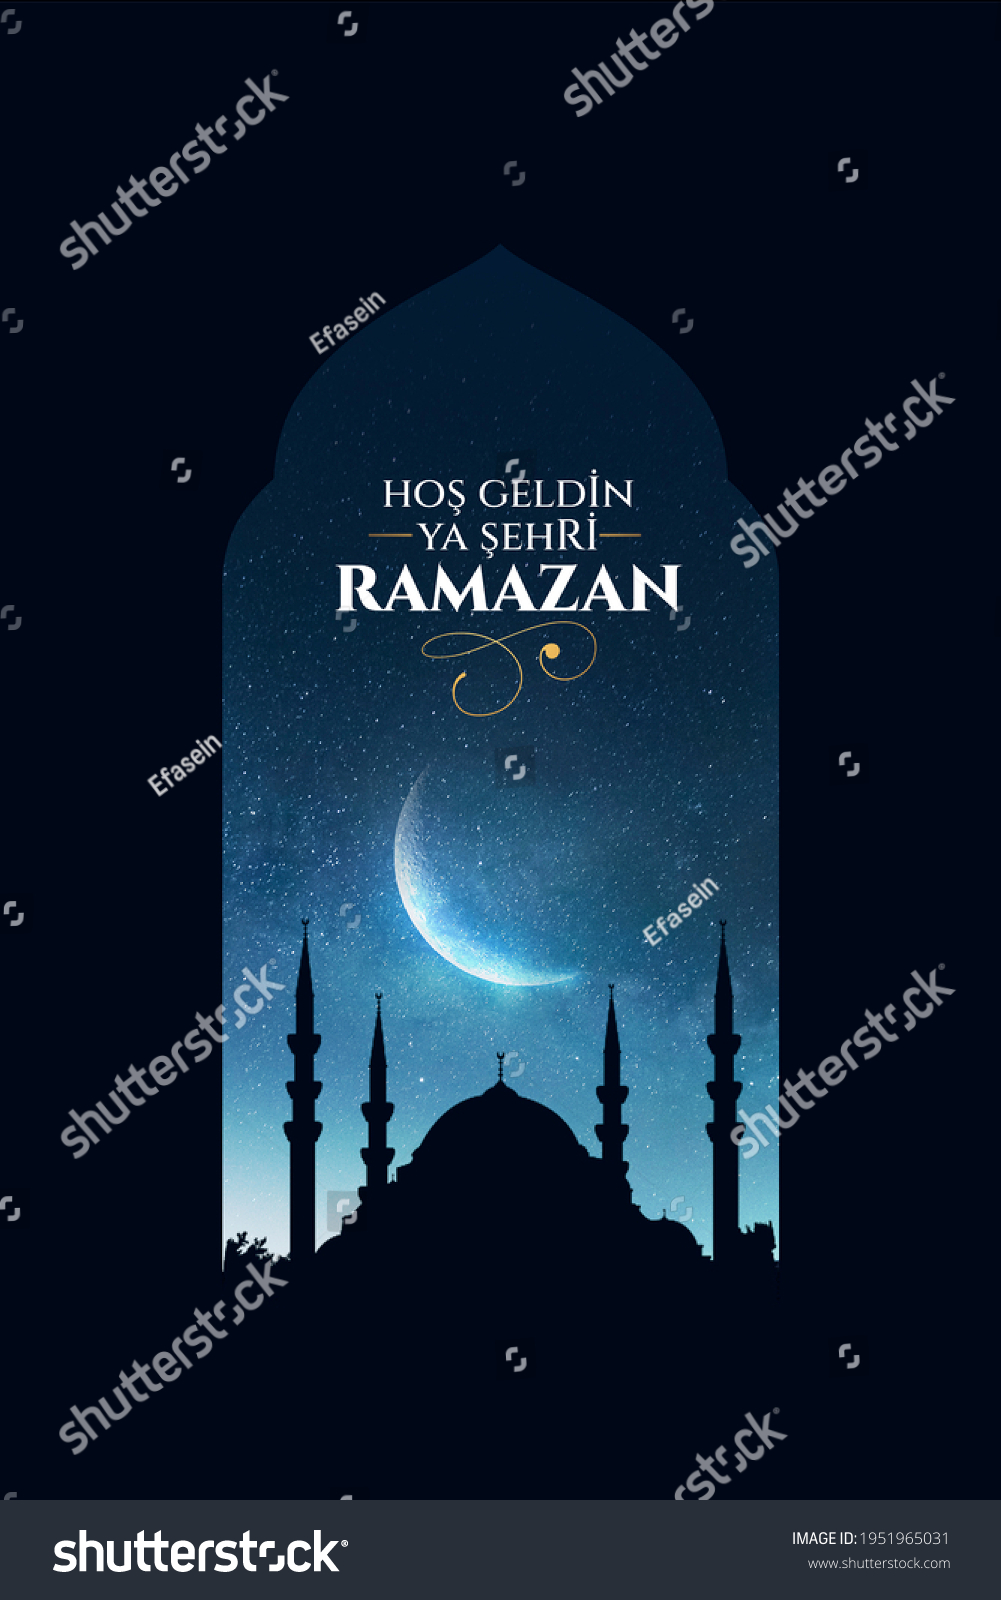 Hoş geldin ya şehri Ramazan. Translation: Welcome to Ramadan #1951965031